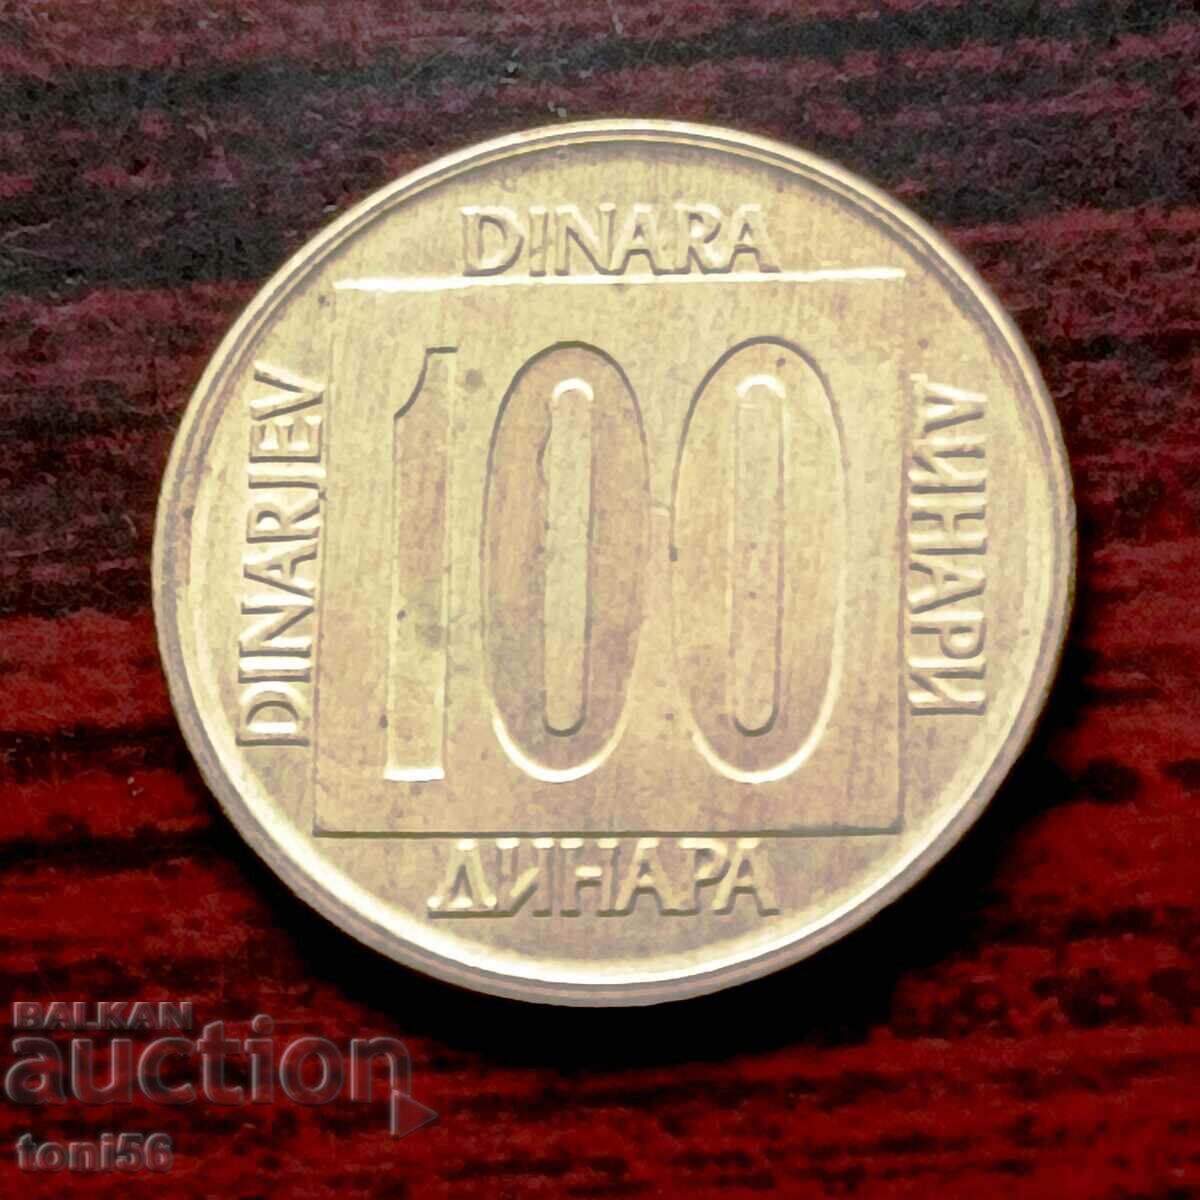 Югославия 100  динара 1988 UNC